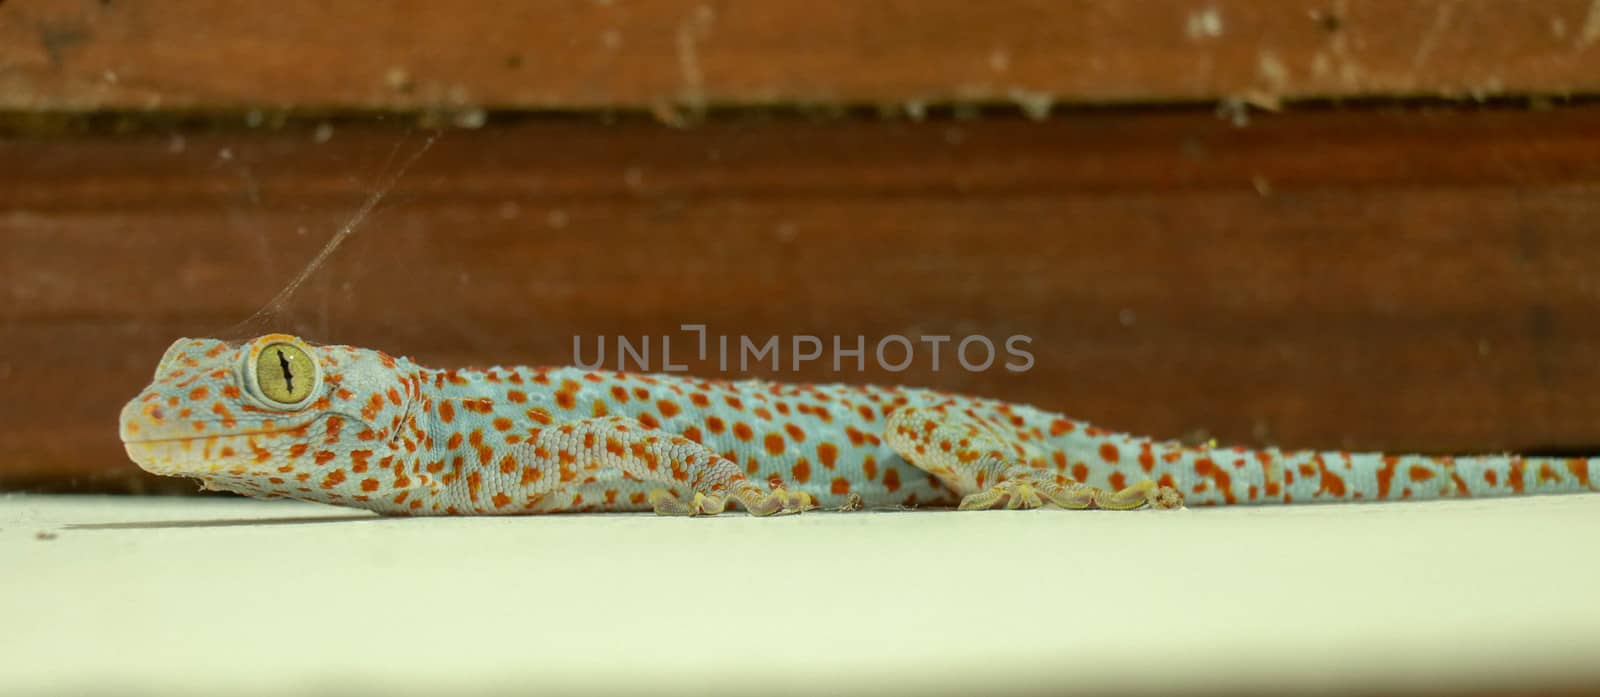 Gekkota Gekko Gecko Tokay Tokkae Lizard on a White Background Isolated even lighting by Sanatana2008